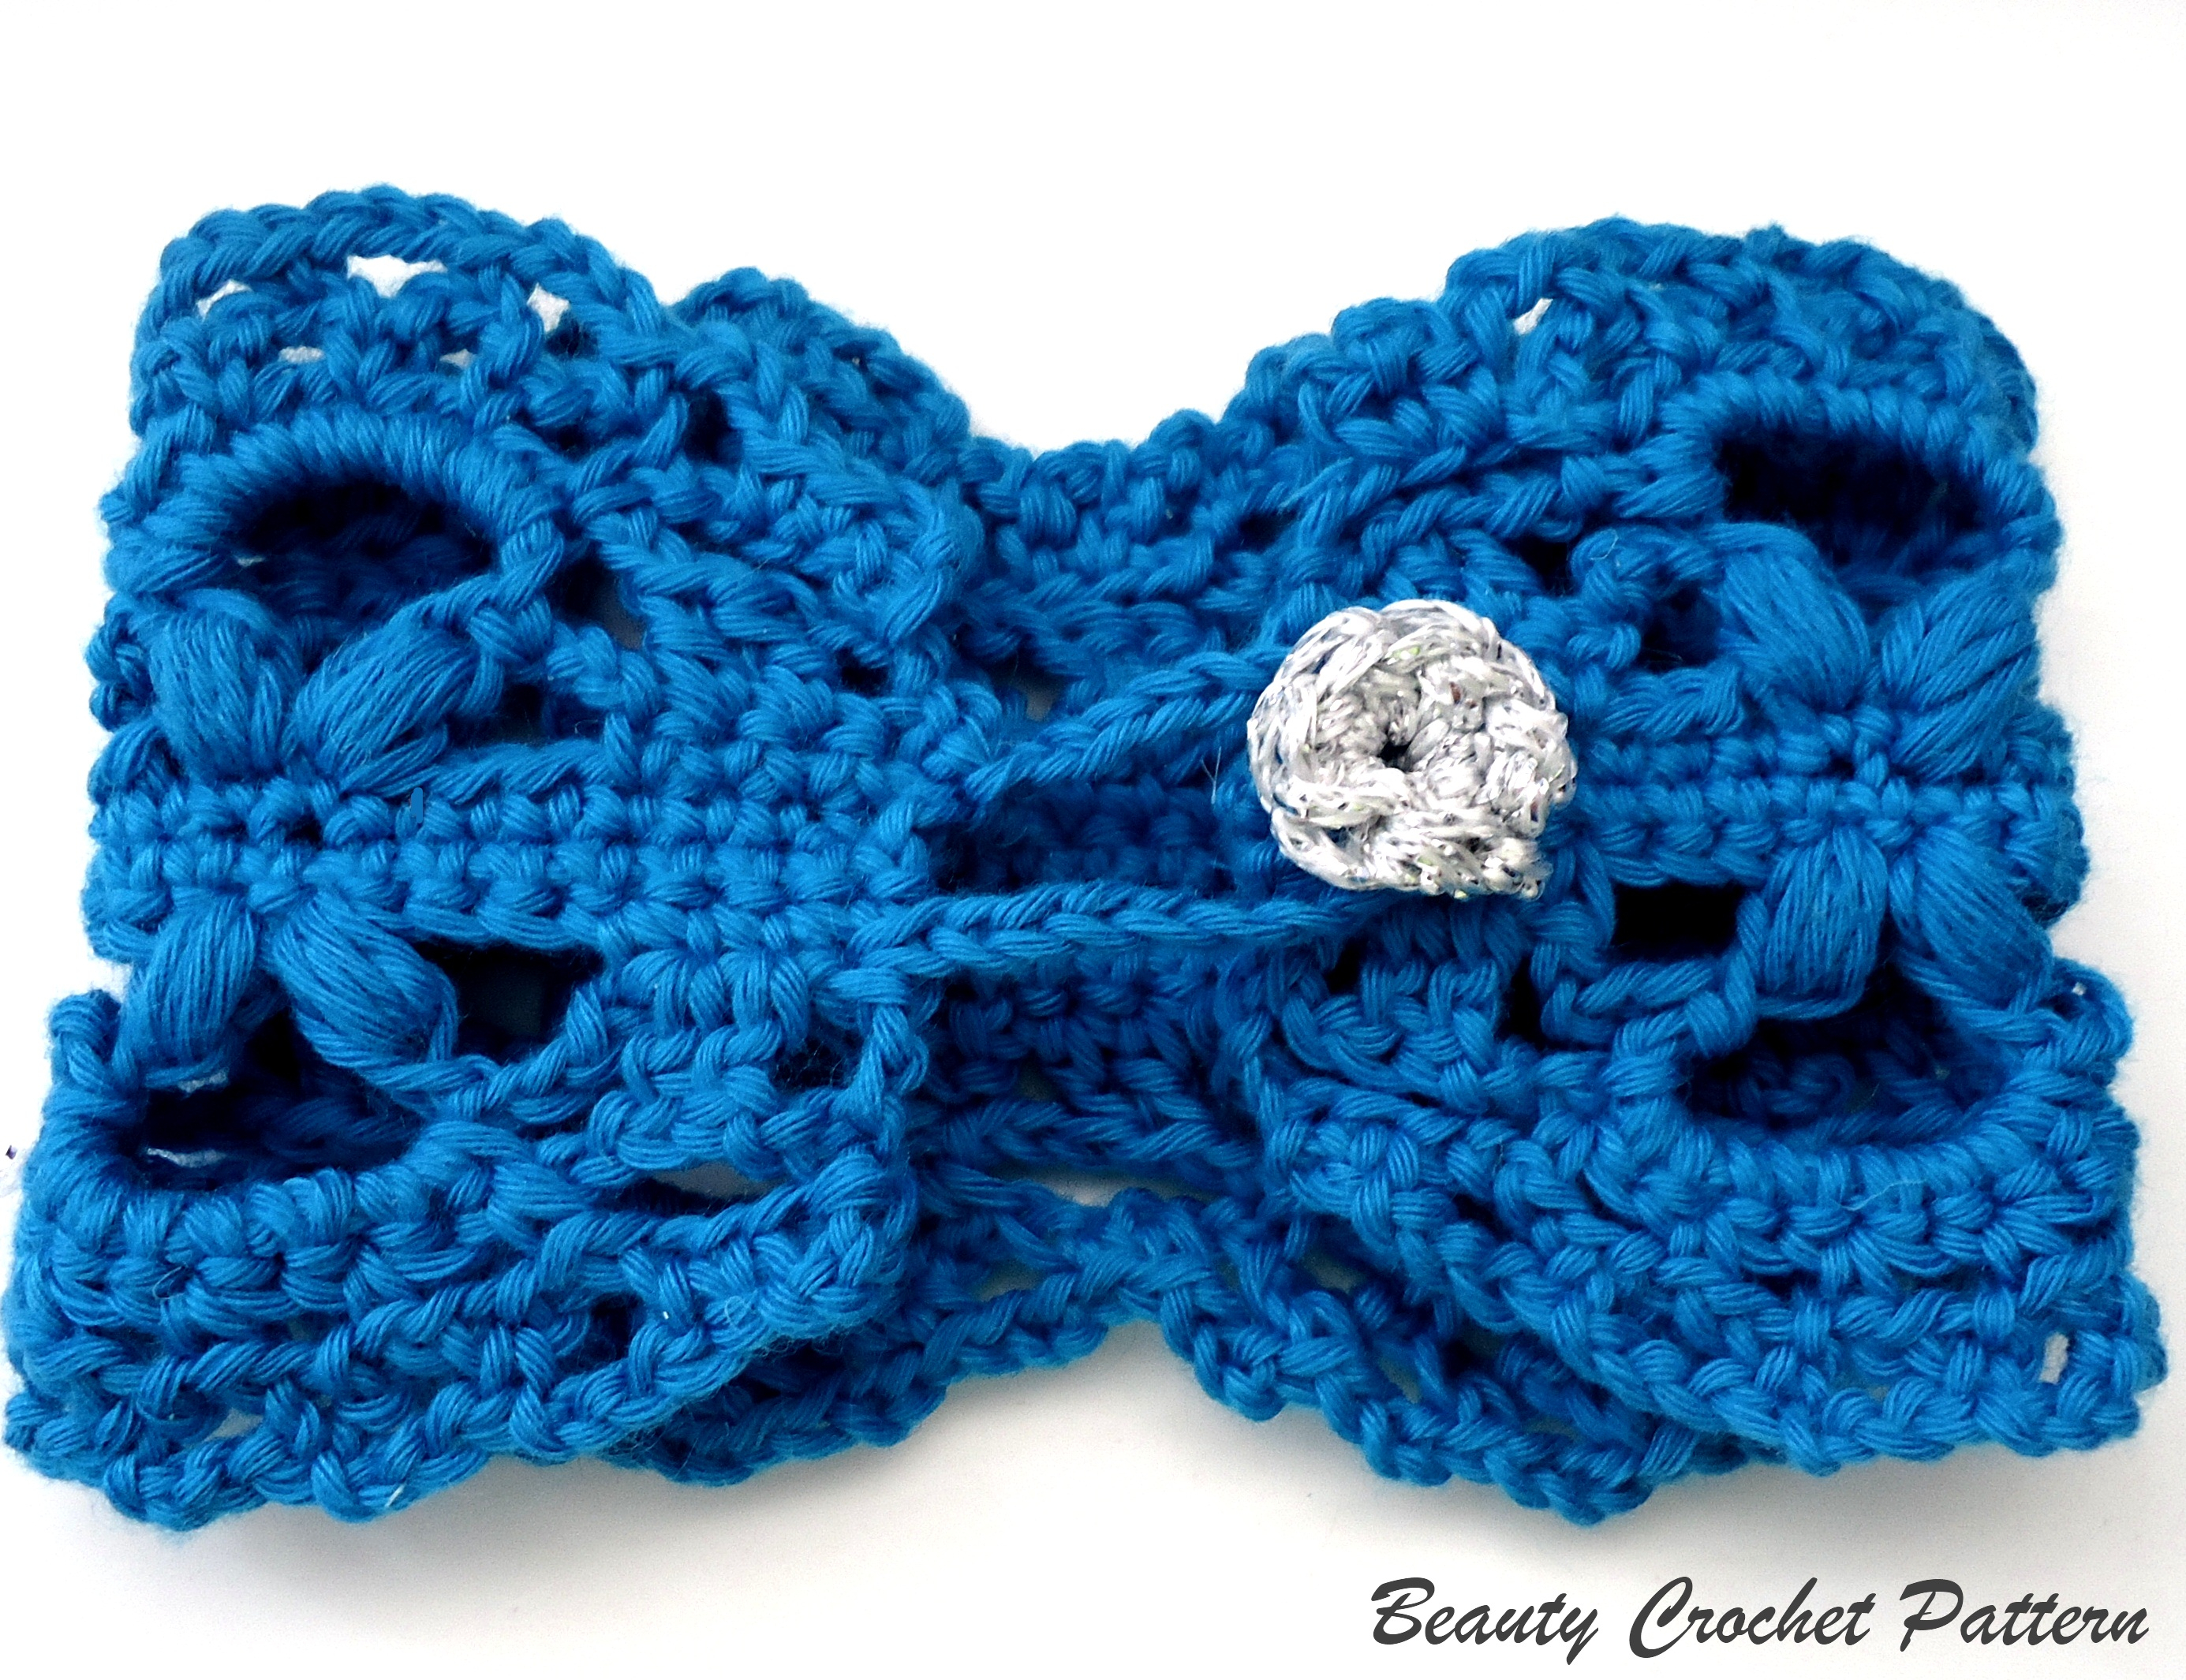 Crochet Pattern Bracelet Lace Crochet Bracelet Pattern With Crochet Buttonblue Crochet